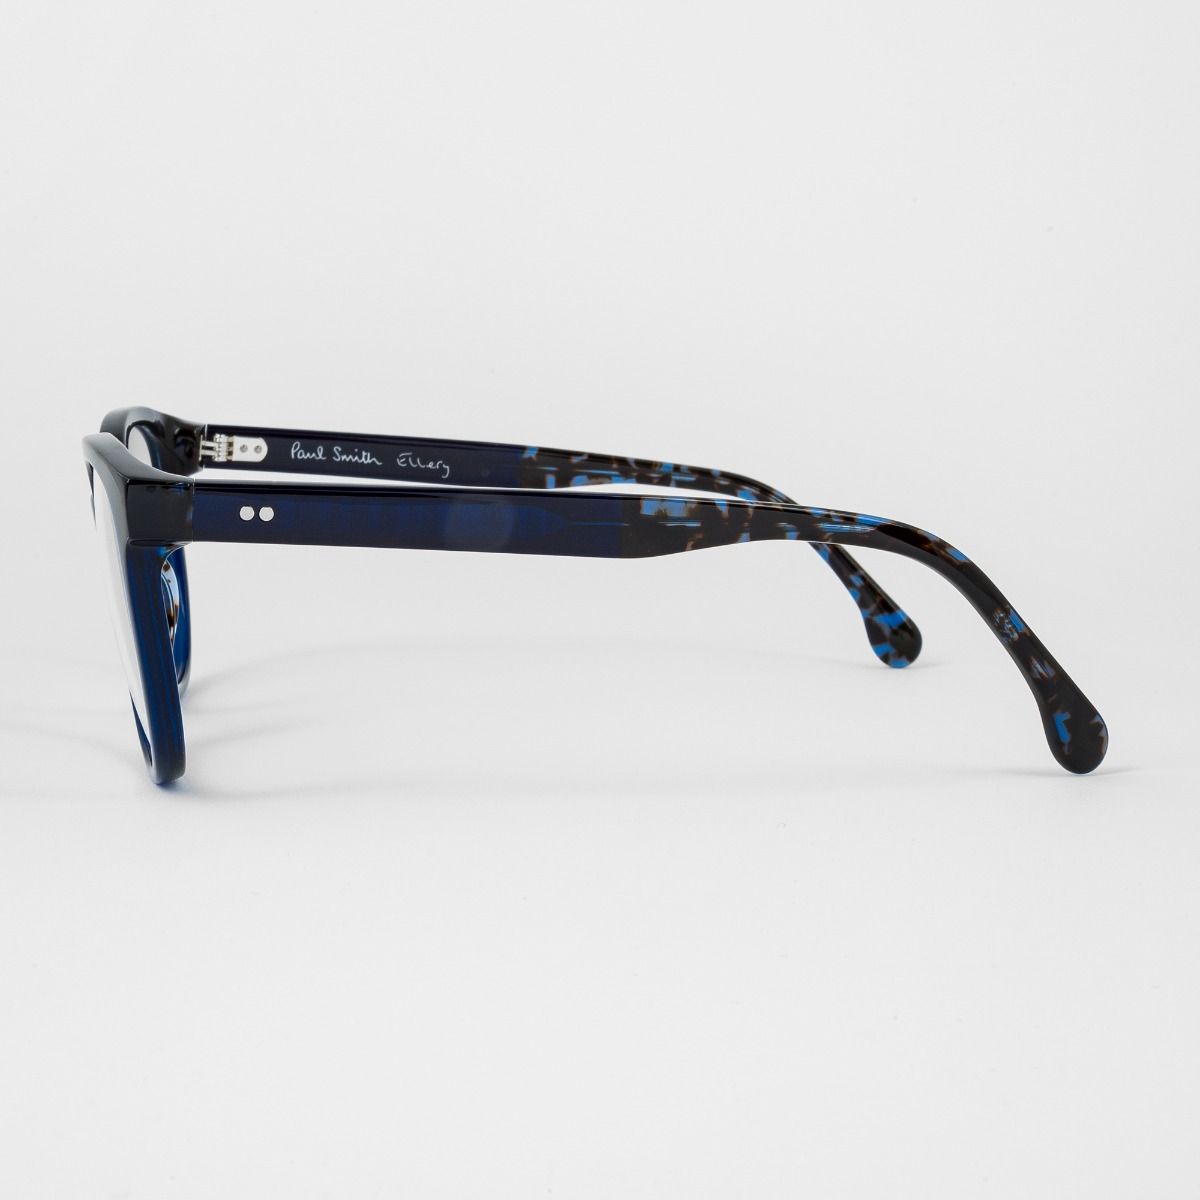 Paul Smith Ellery Optical Cat-Eye Glasses-Classic Navy Blue